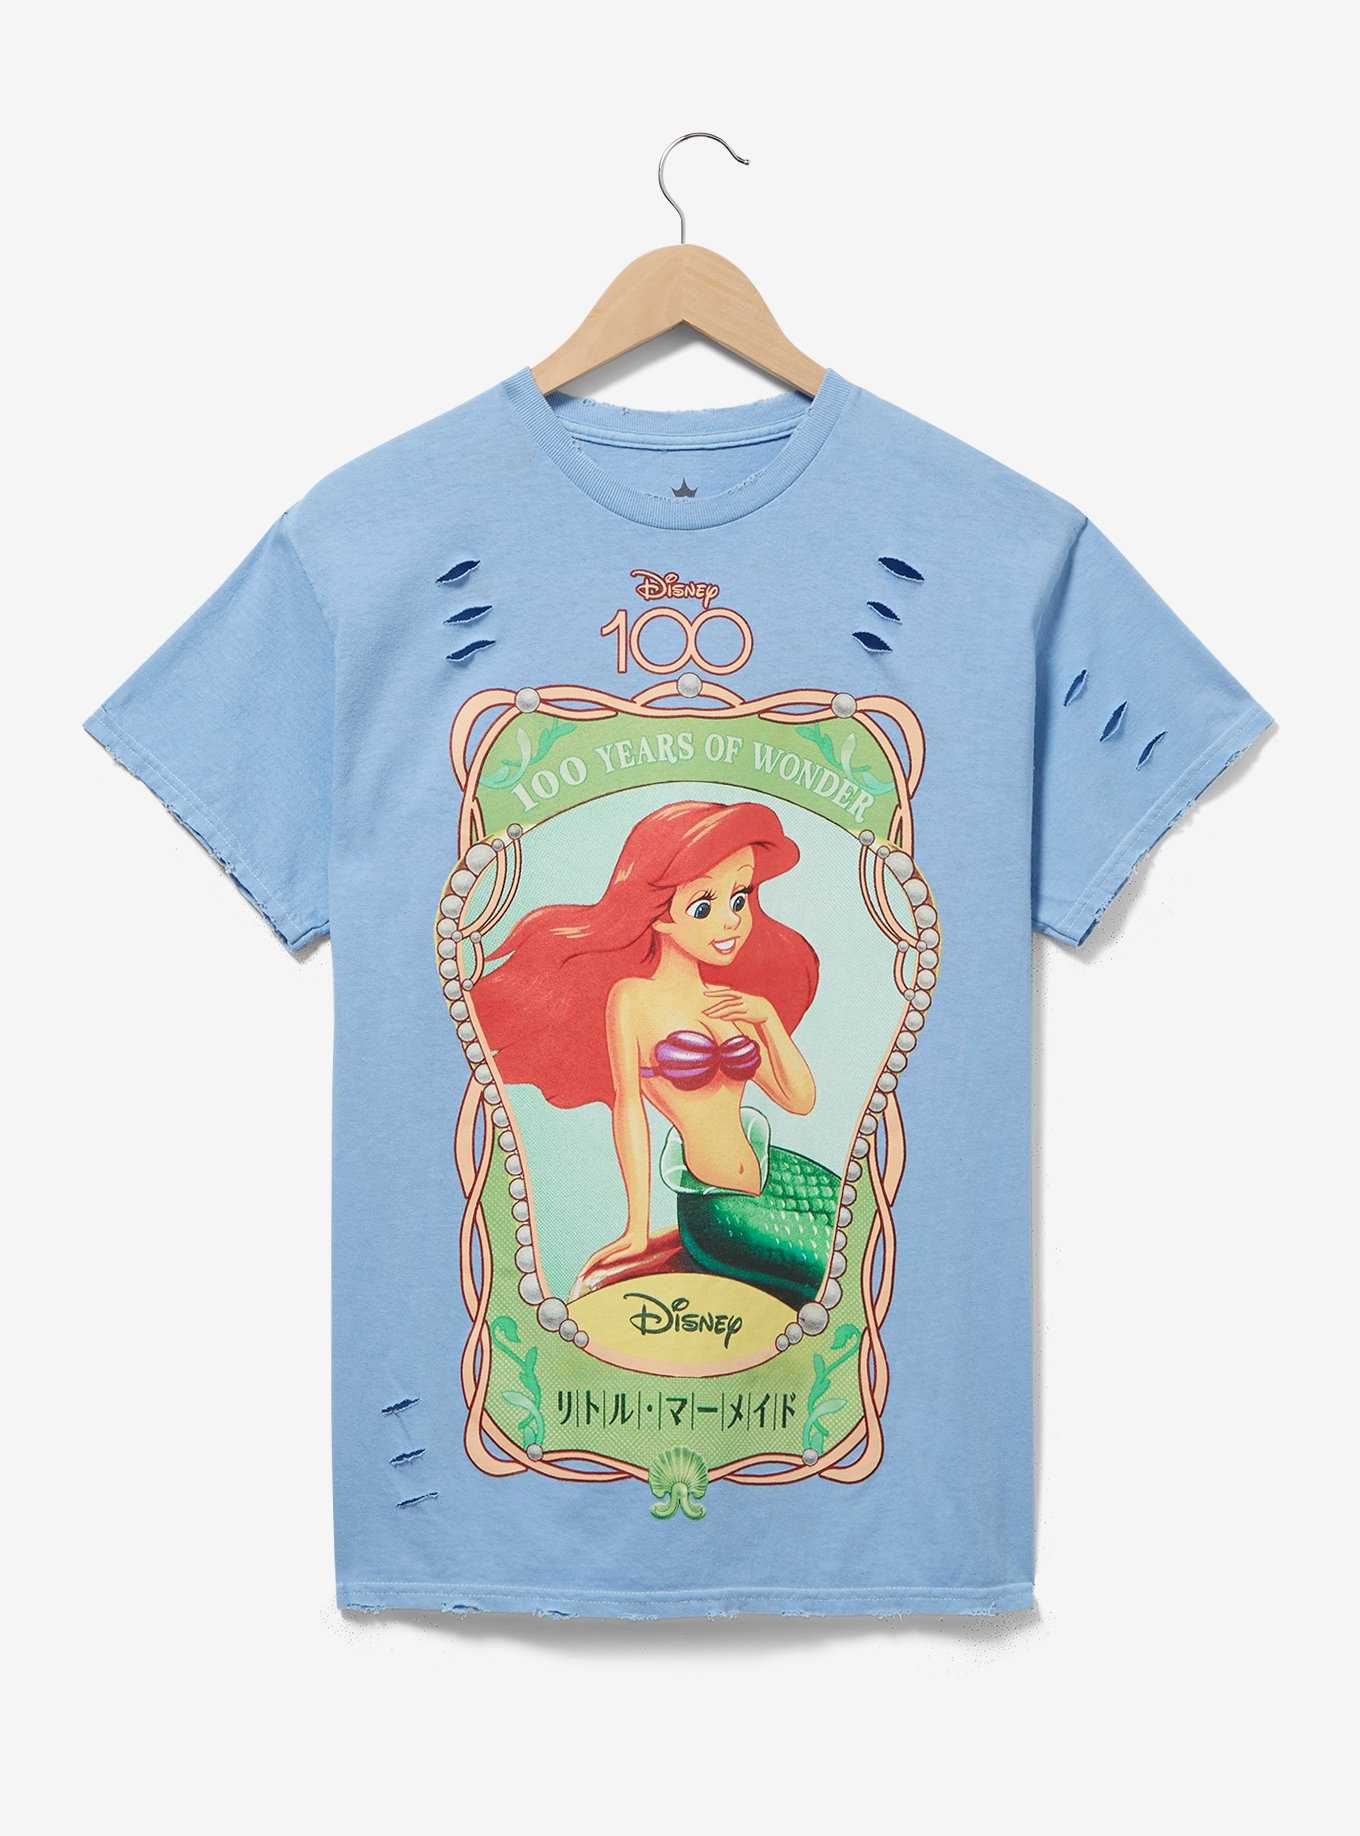 Ariel Little Mermaid Disney Princess Shell Bra Disneybound T-shirt -   Canada